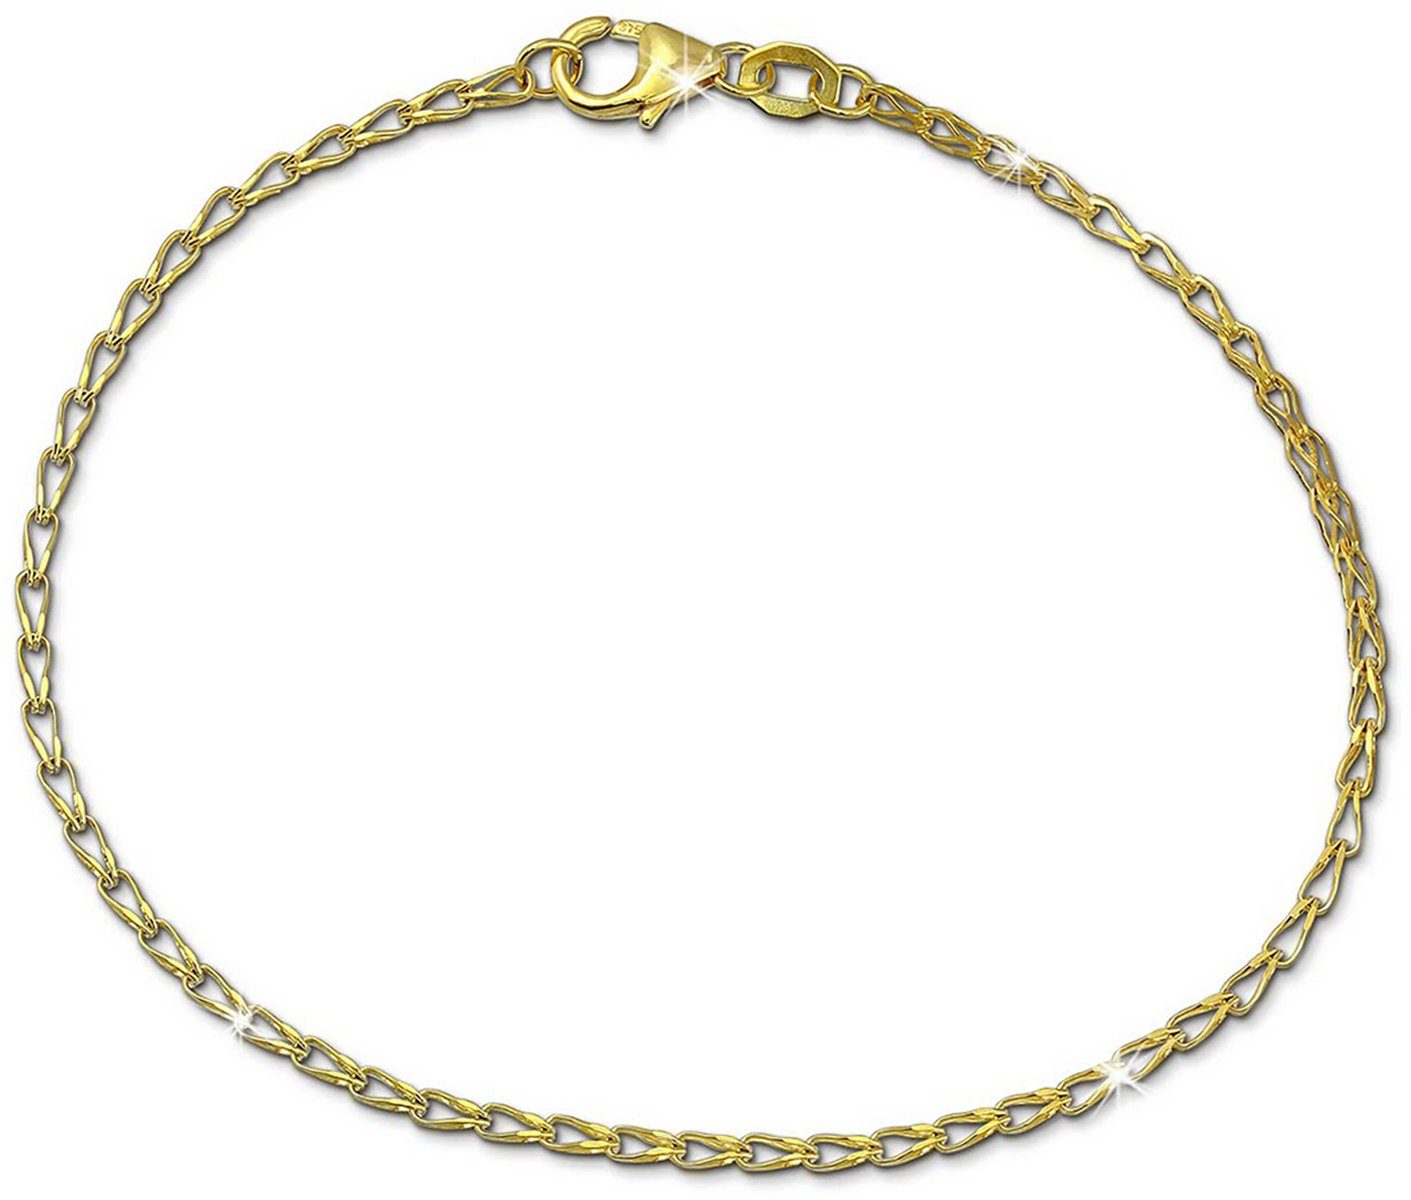 GoldDream Goldarmband »GDA0508Y GoldDream 18cm Damen Armband Zopf 9Karat« ( Armband), Damen Armband (Zopf) ca. 18cm, 375 Gelbgold - 9 Karat, Farbe: gold  online kaufen | OTTO